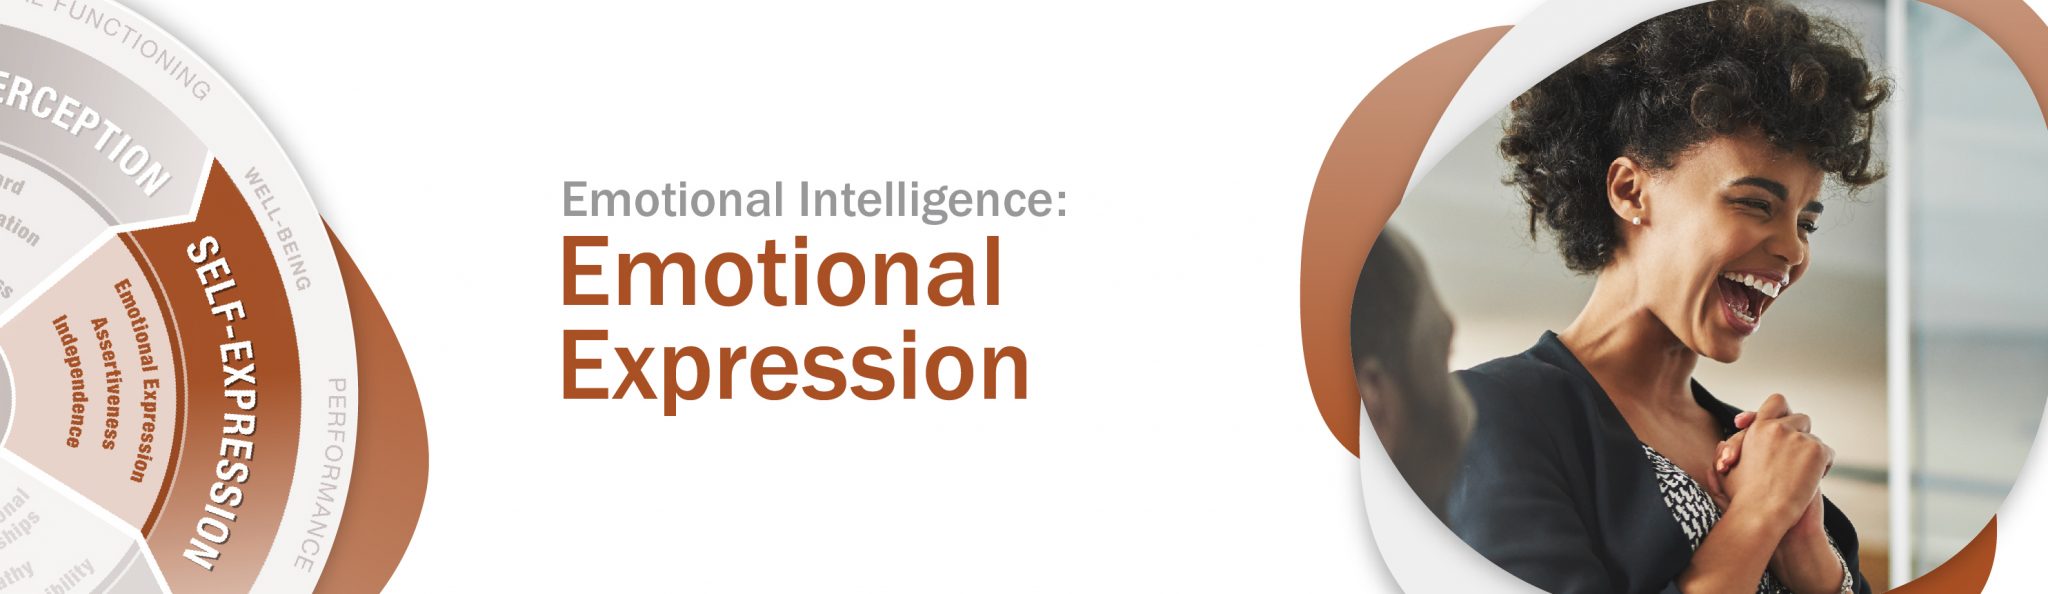 Leading with Emotional Intelligence: Emotional Expression